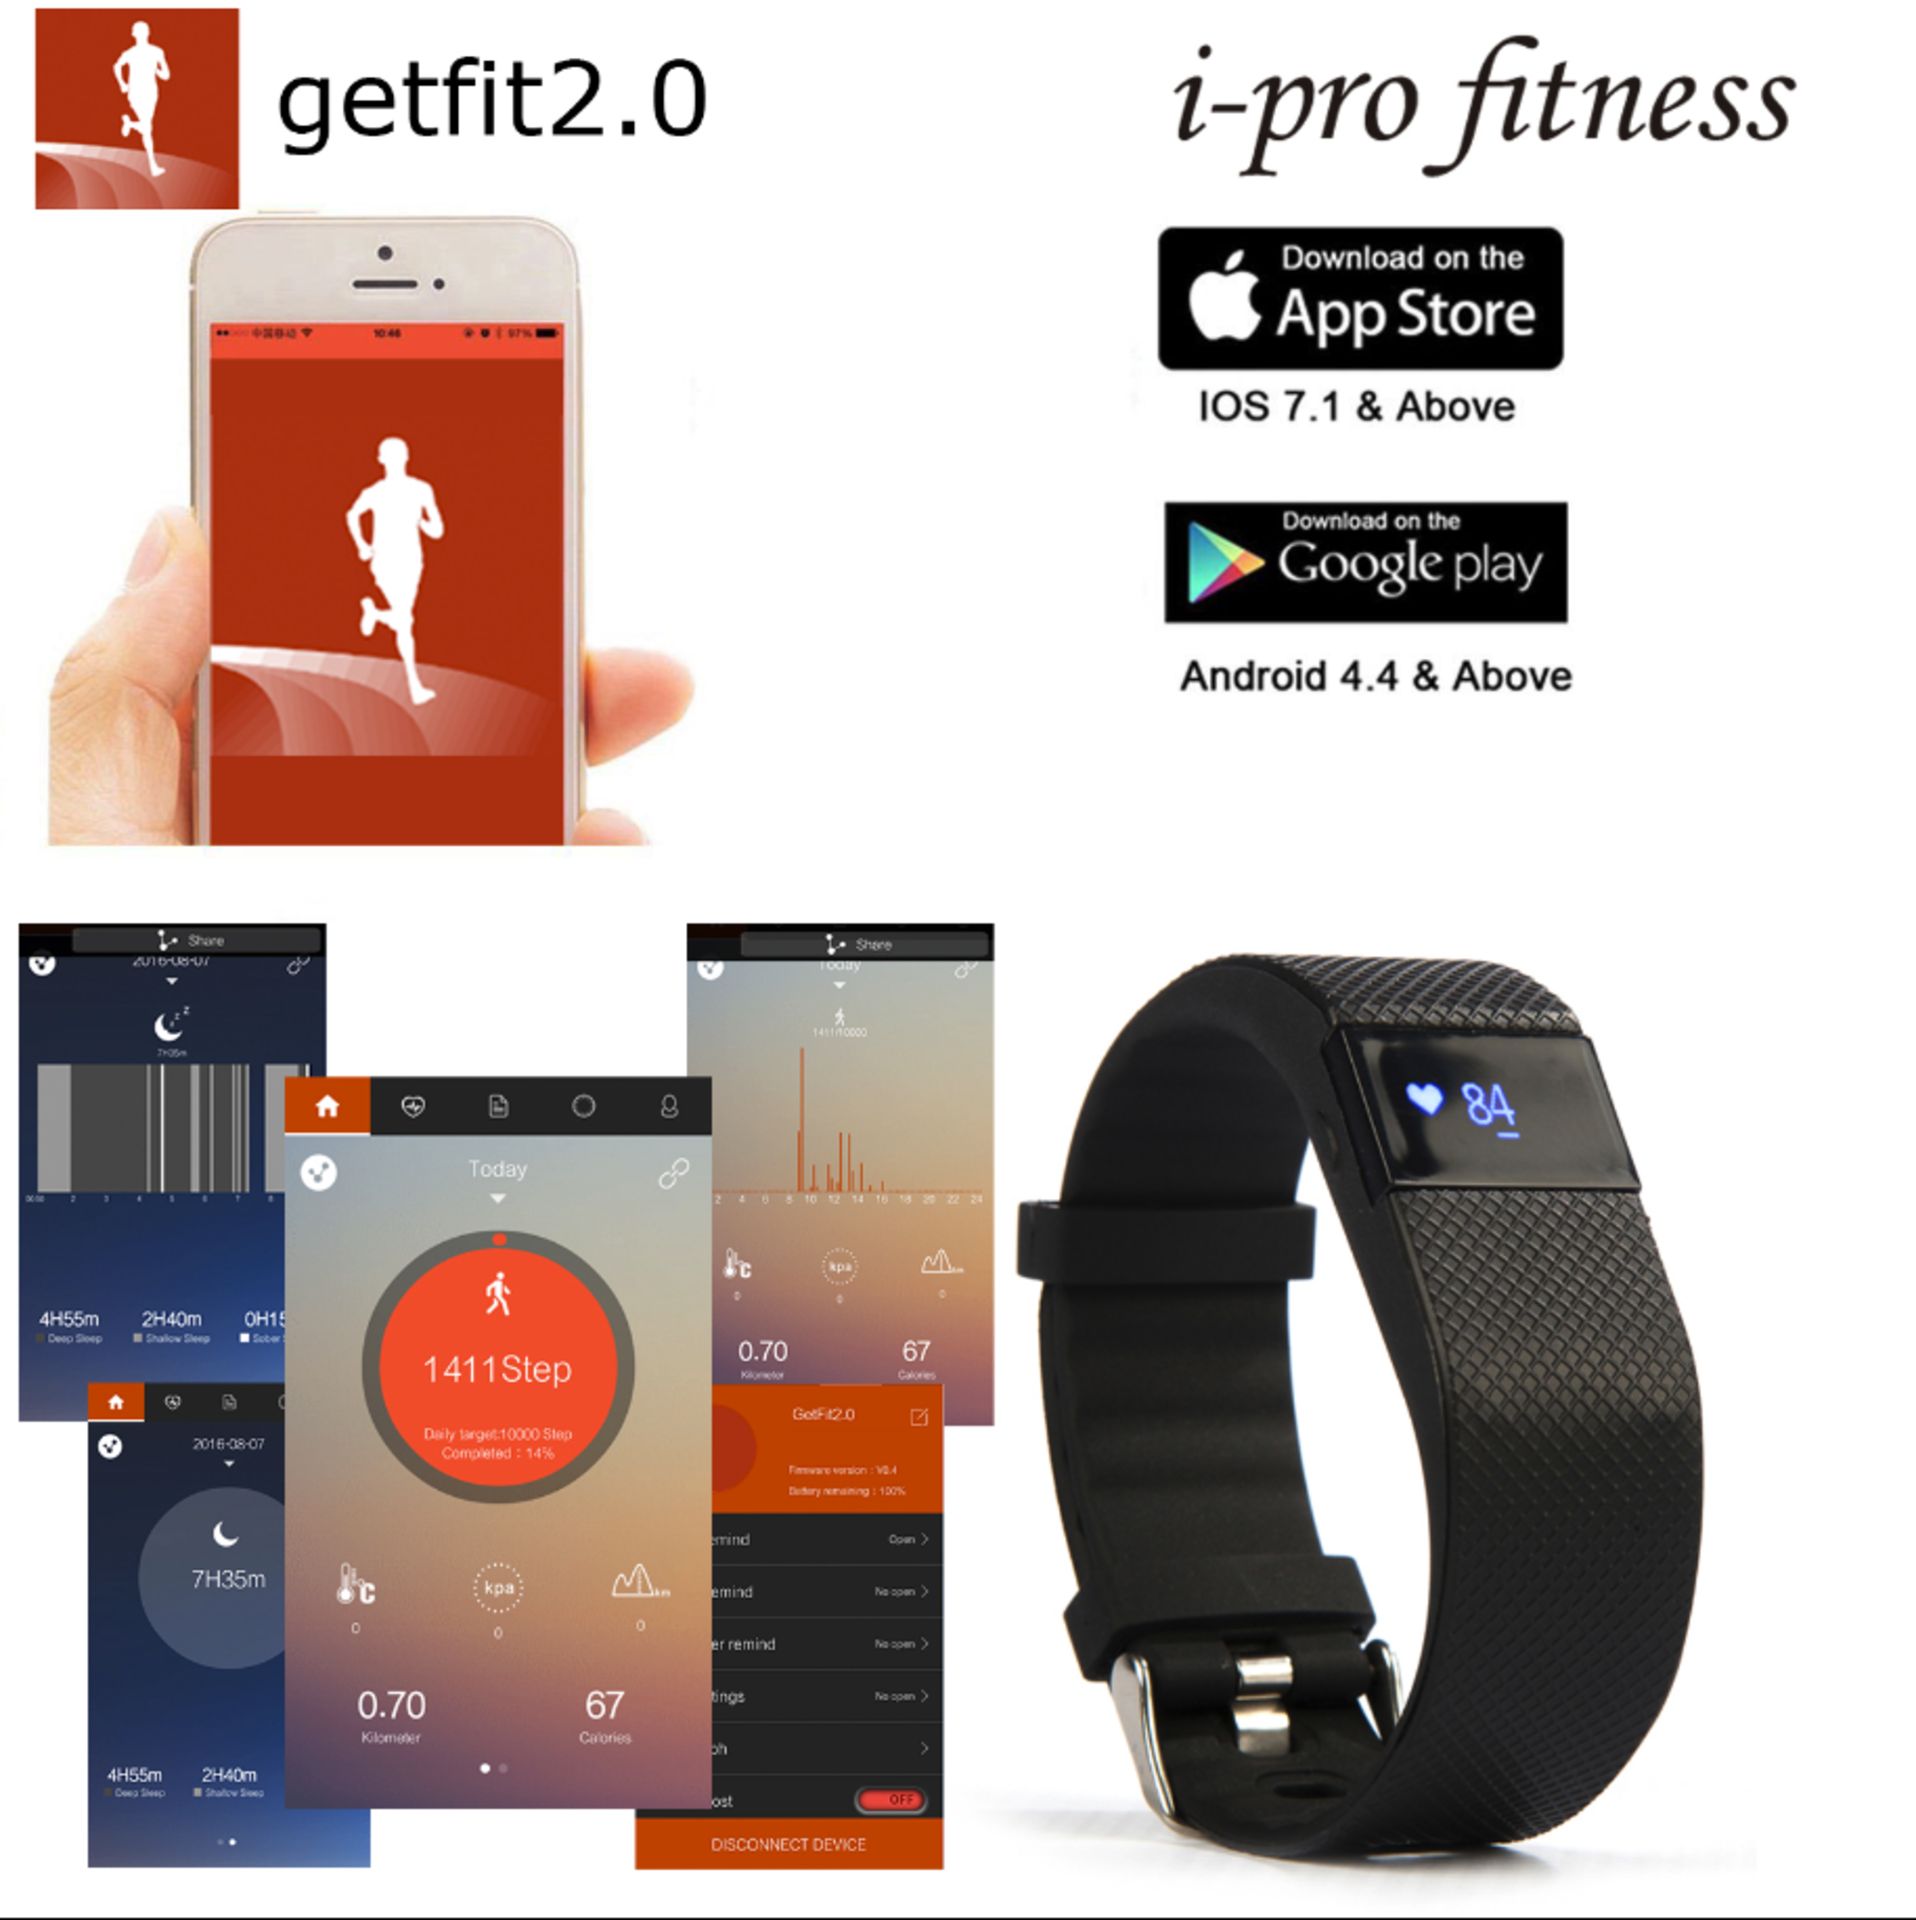 **Trade lot** 50 x Units Fitness Tracker i-pro fitness, Bluetooth 4.0 Sports Smart Bracelet - Image 5 of 8